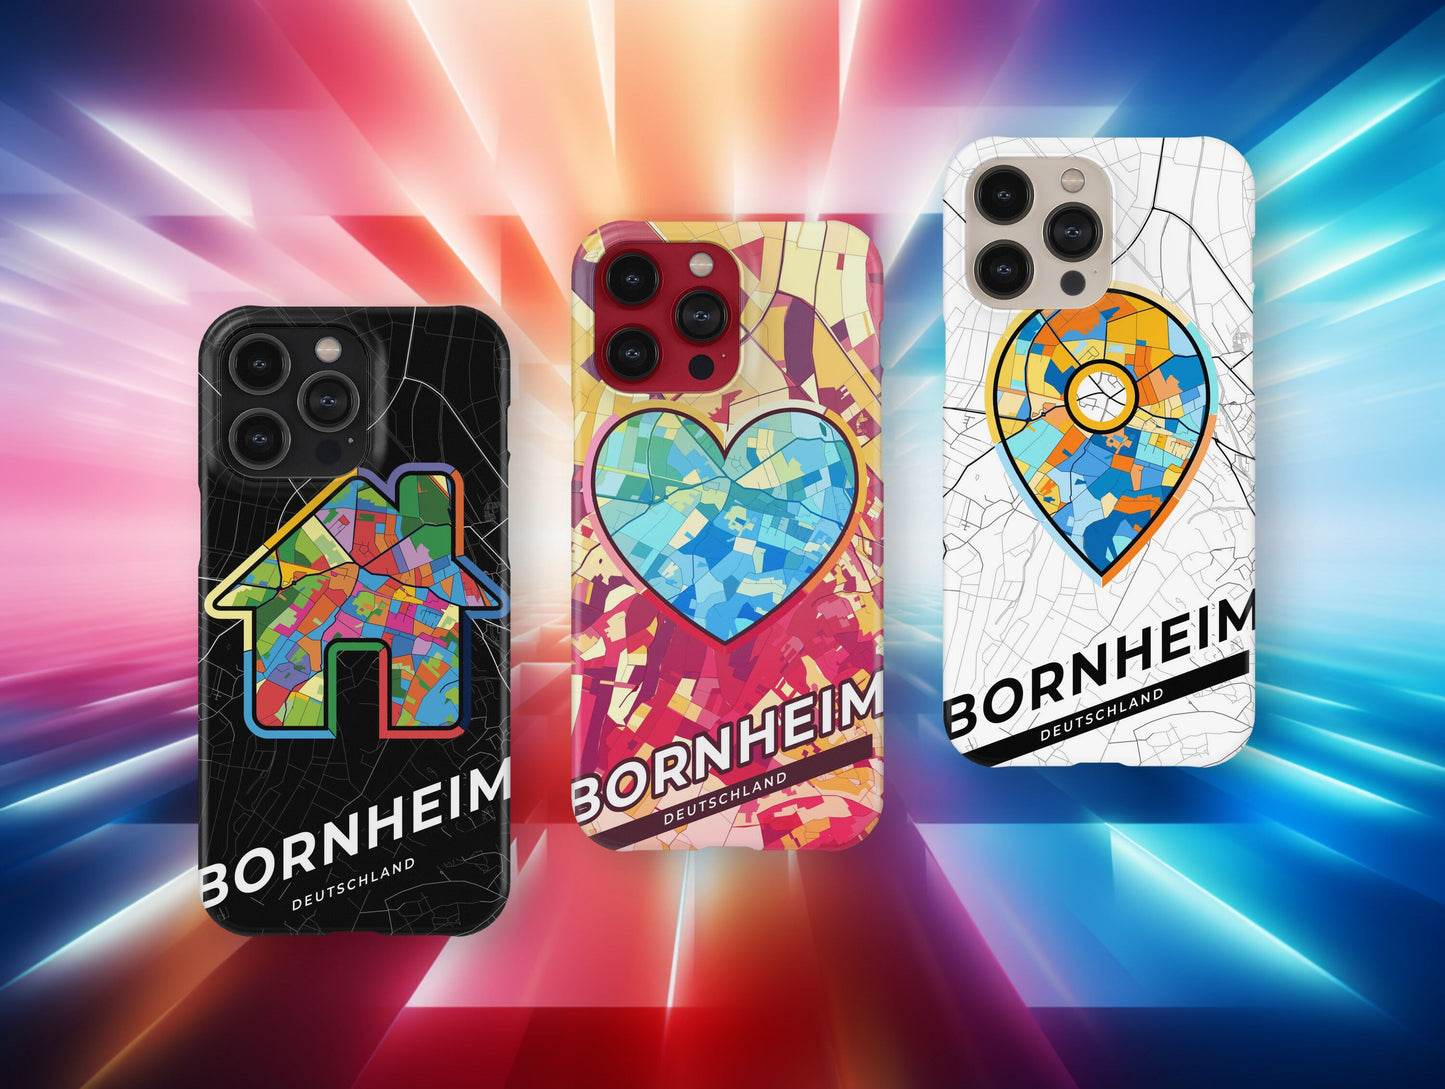 Bornheim Deutschland slim phone case with colorful icon. Birthday, wedding or housewarming gift. Couple match cases.